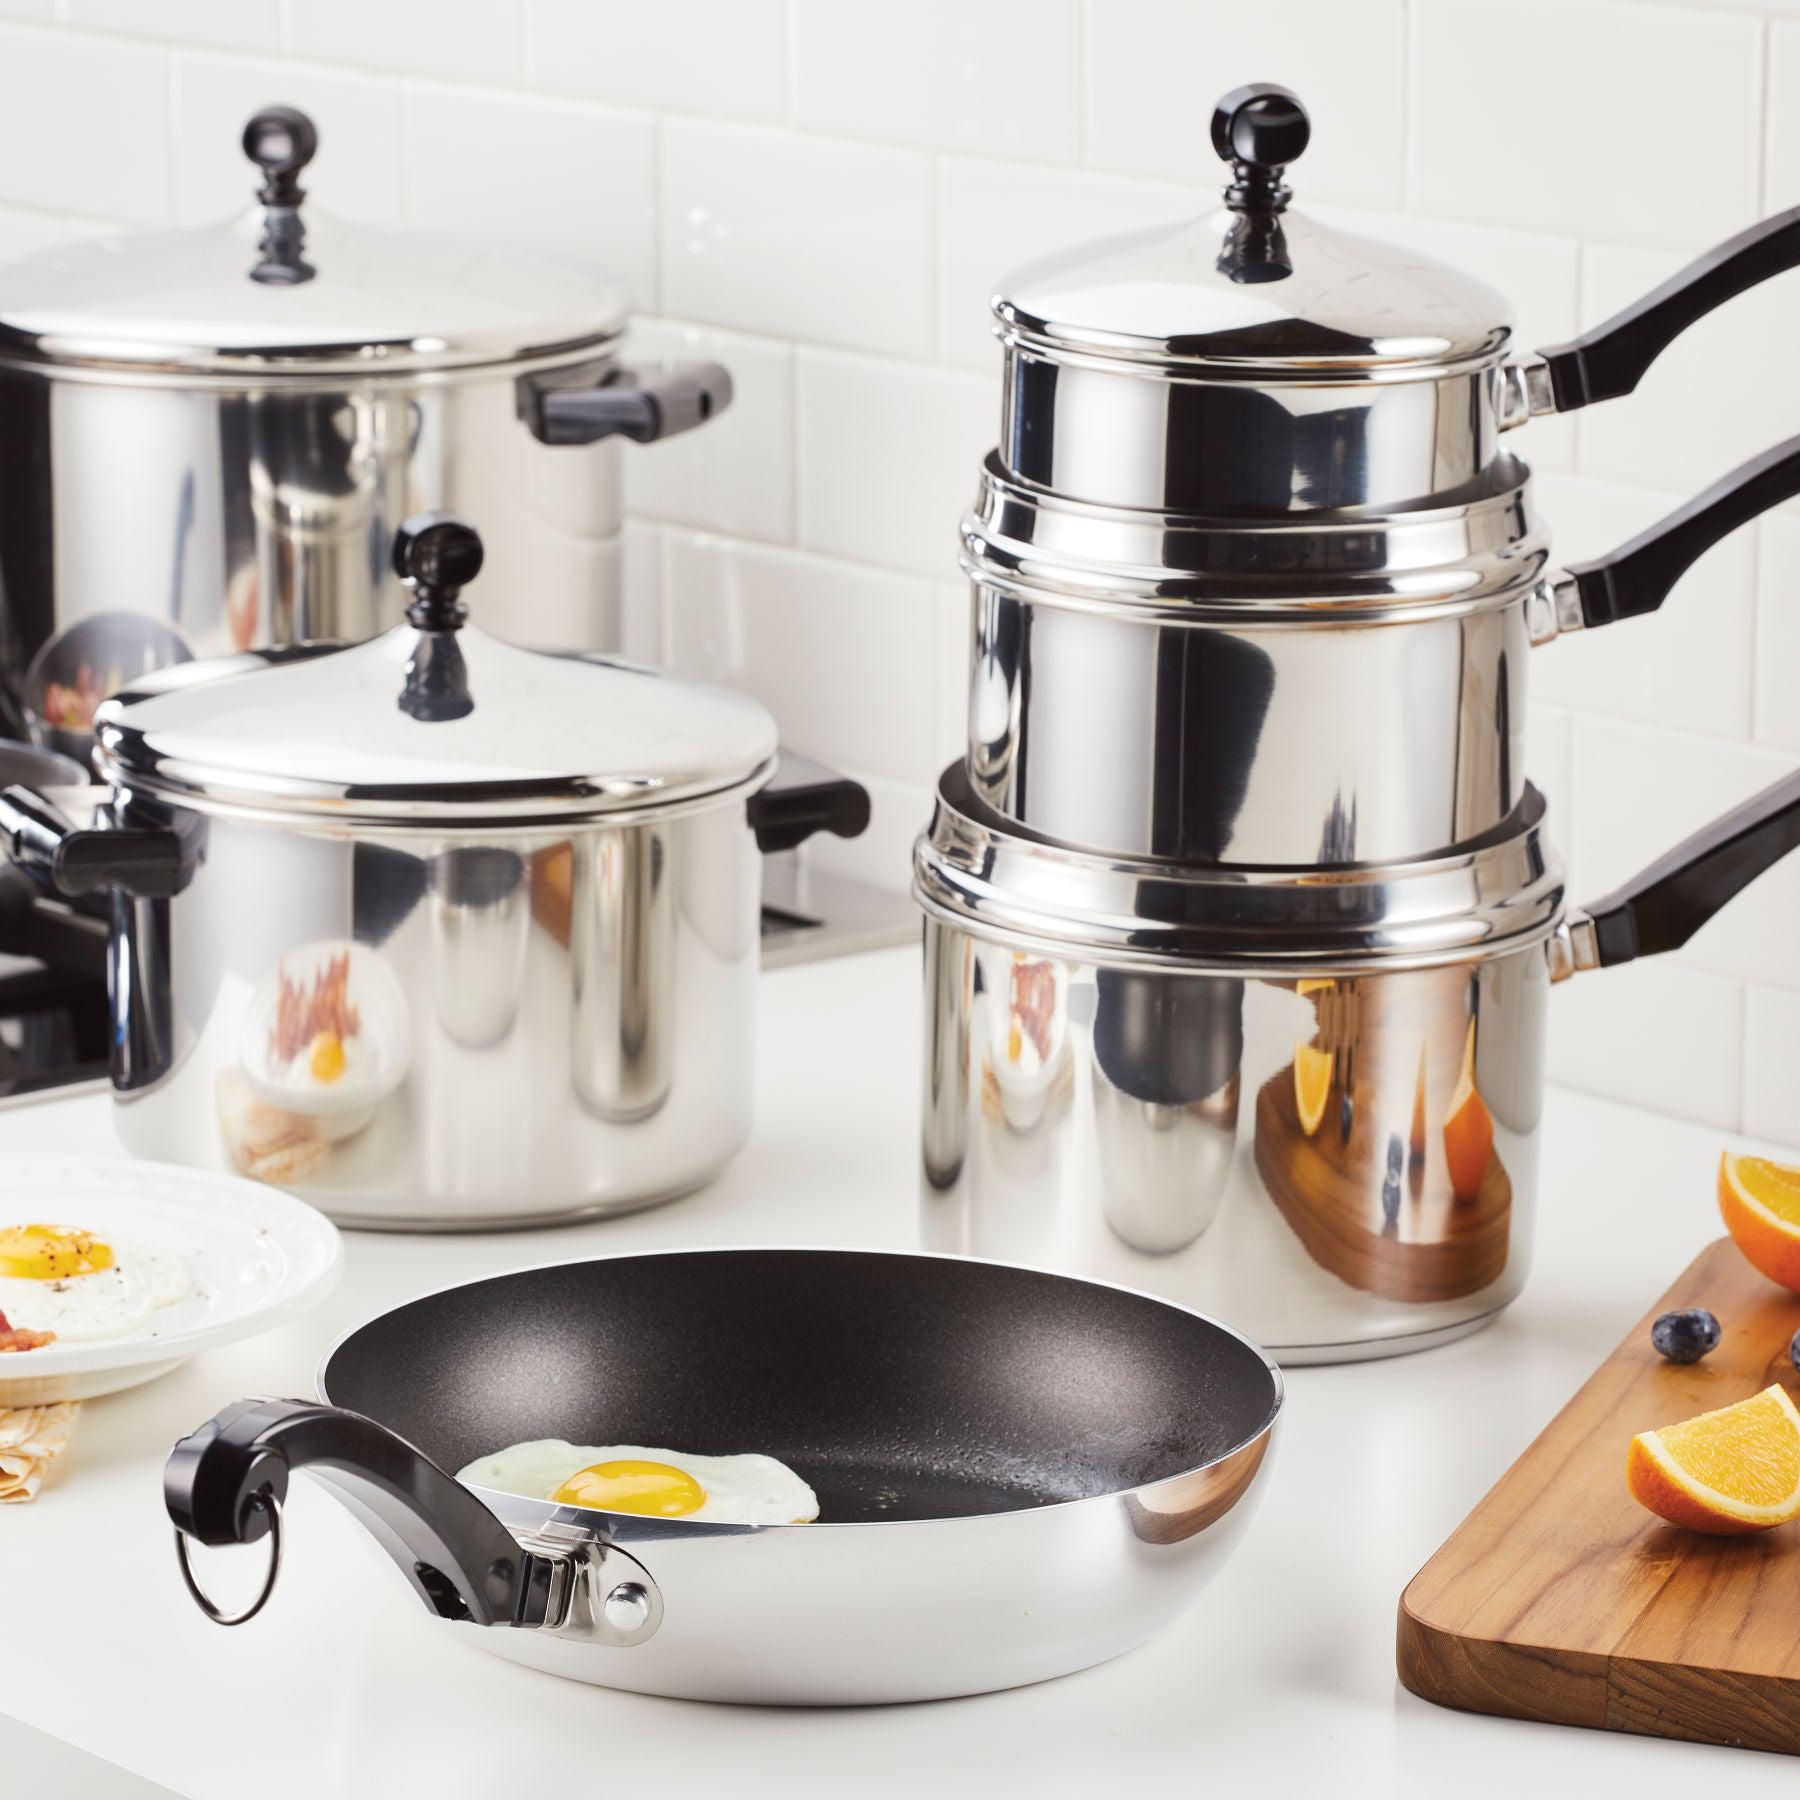 Home Non-stick Stainless Steel Cookware Set Kitchen Pots & Pans Set 15 Piece